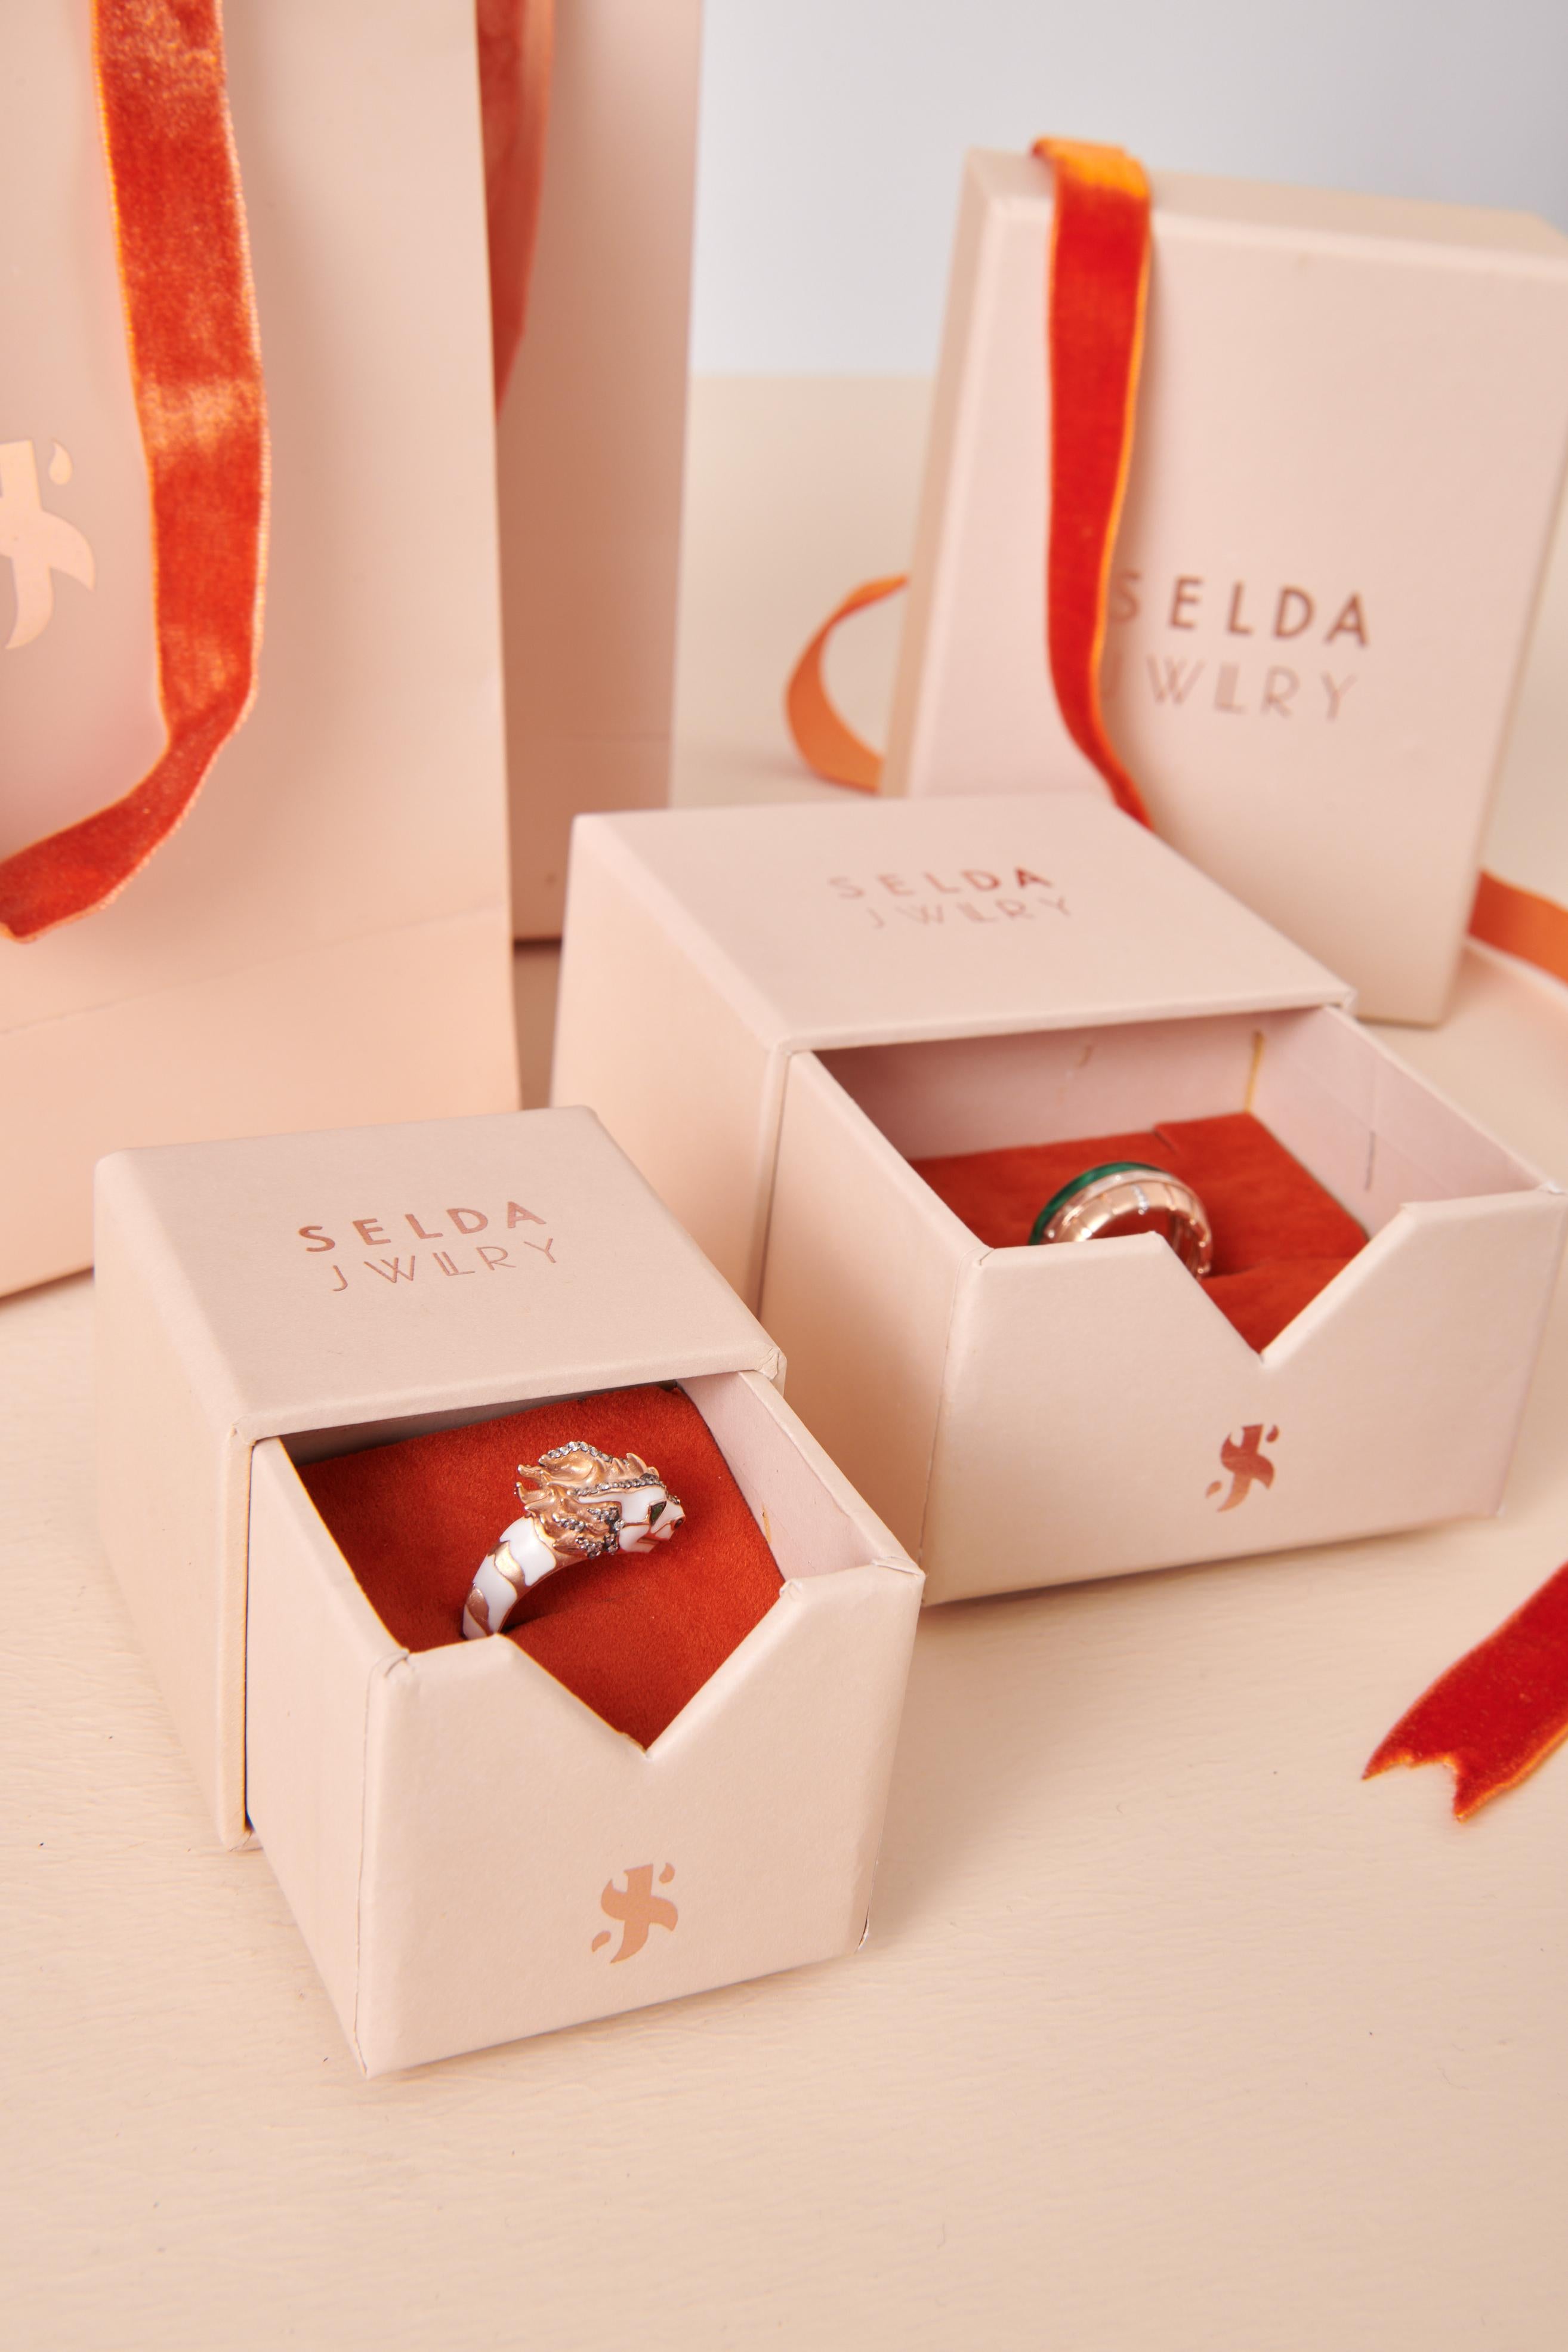 Modern Selda Jewellery Taotie Narrow Bangle in 14K Rose Gold with 0.2ct White Diamond For Sale